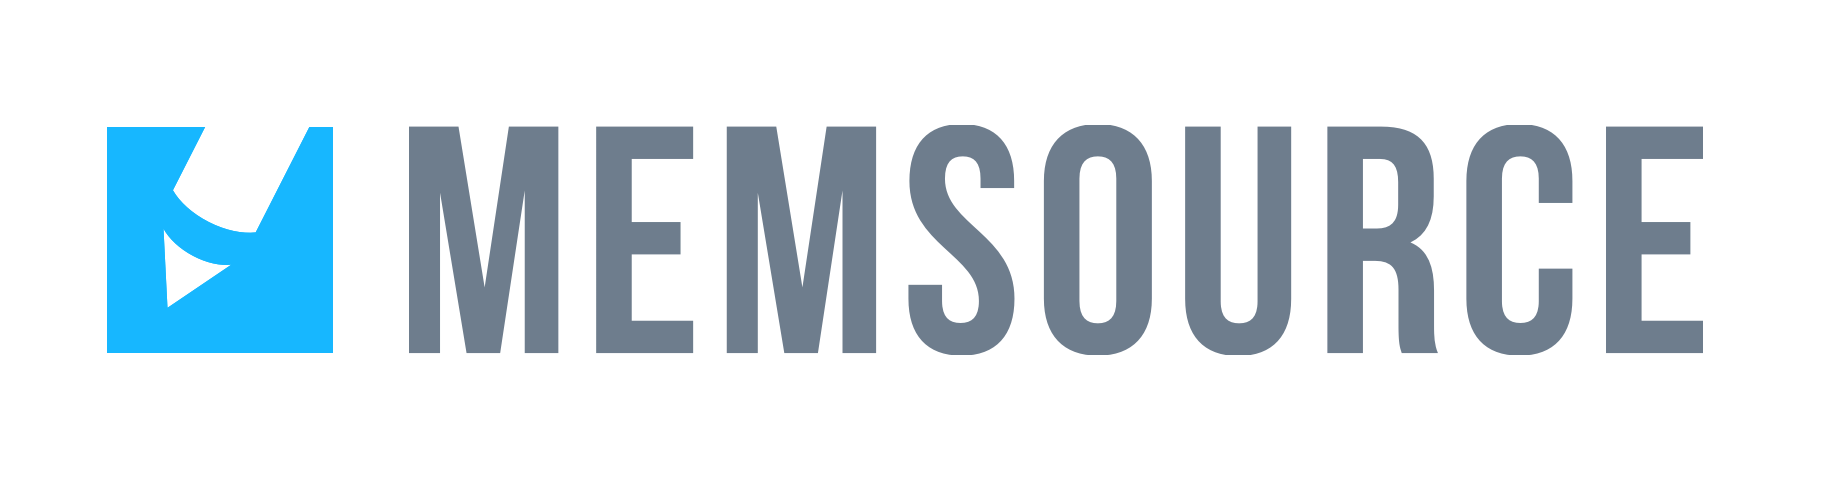 memsource logo.png